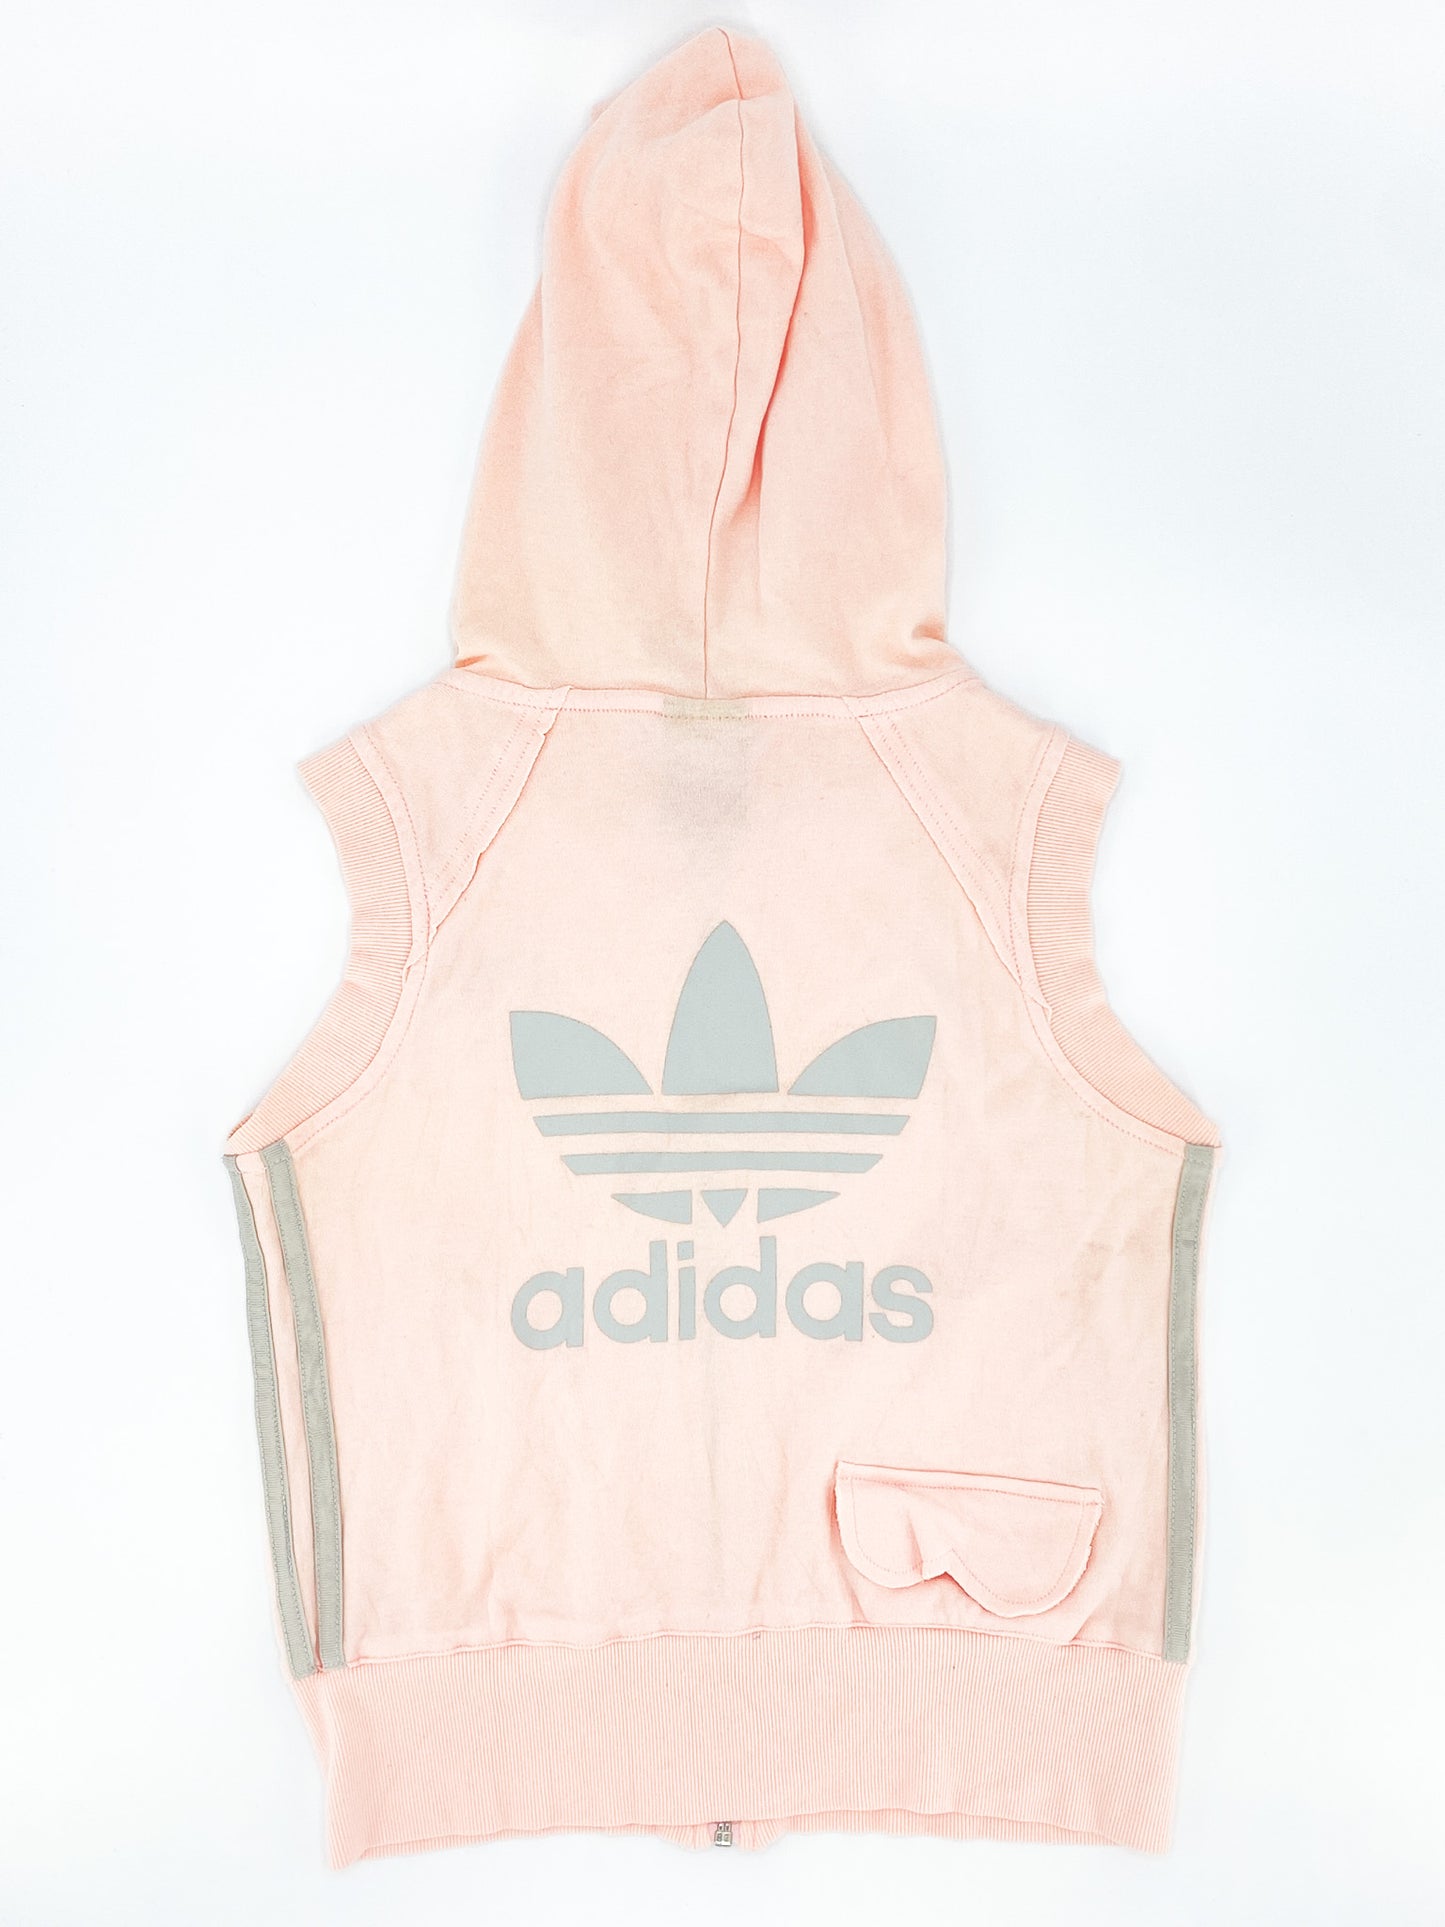 Vintage Adidas Pink Vest - 10